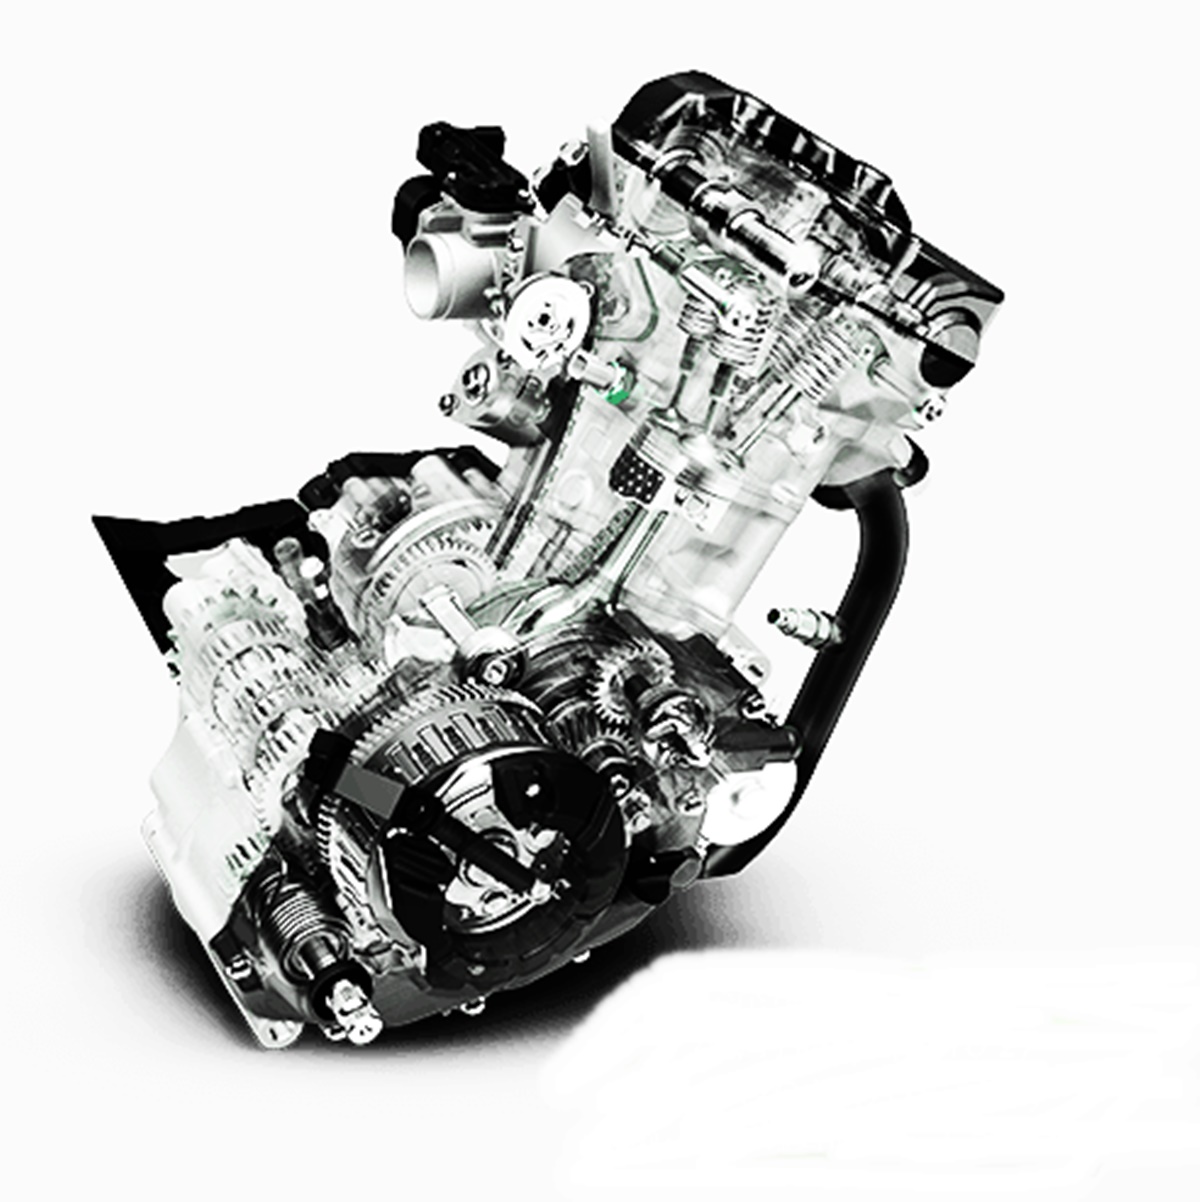 Engine Honda Supra GTR 150